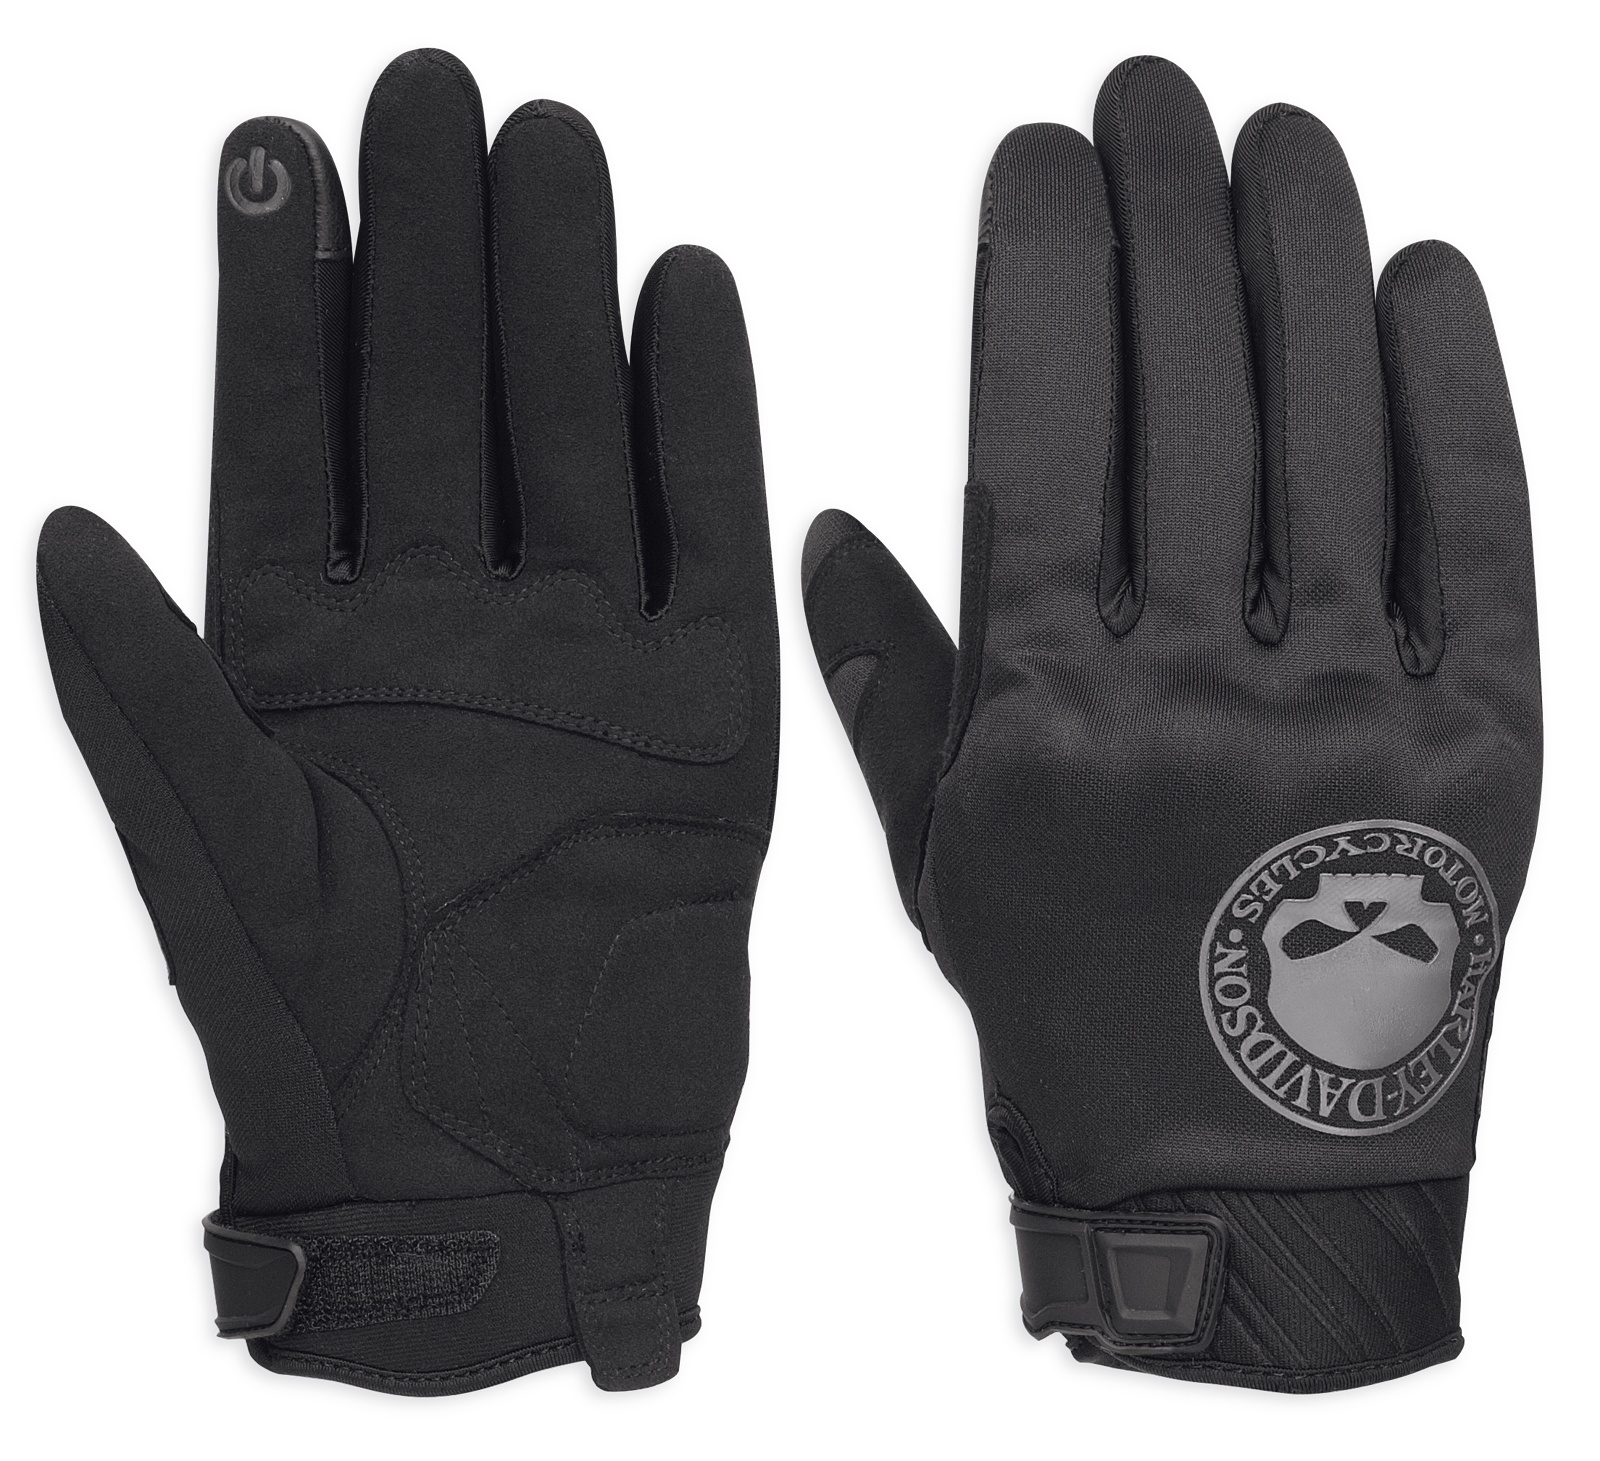 98364 17em Harley Davidson Skull Soft Shell Gloves Ec At Thunderbike Shop